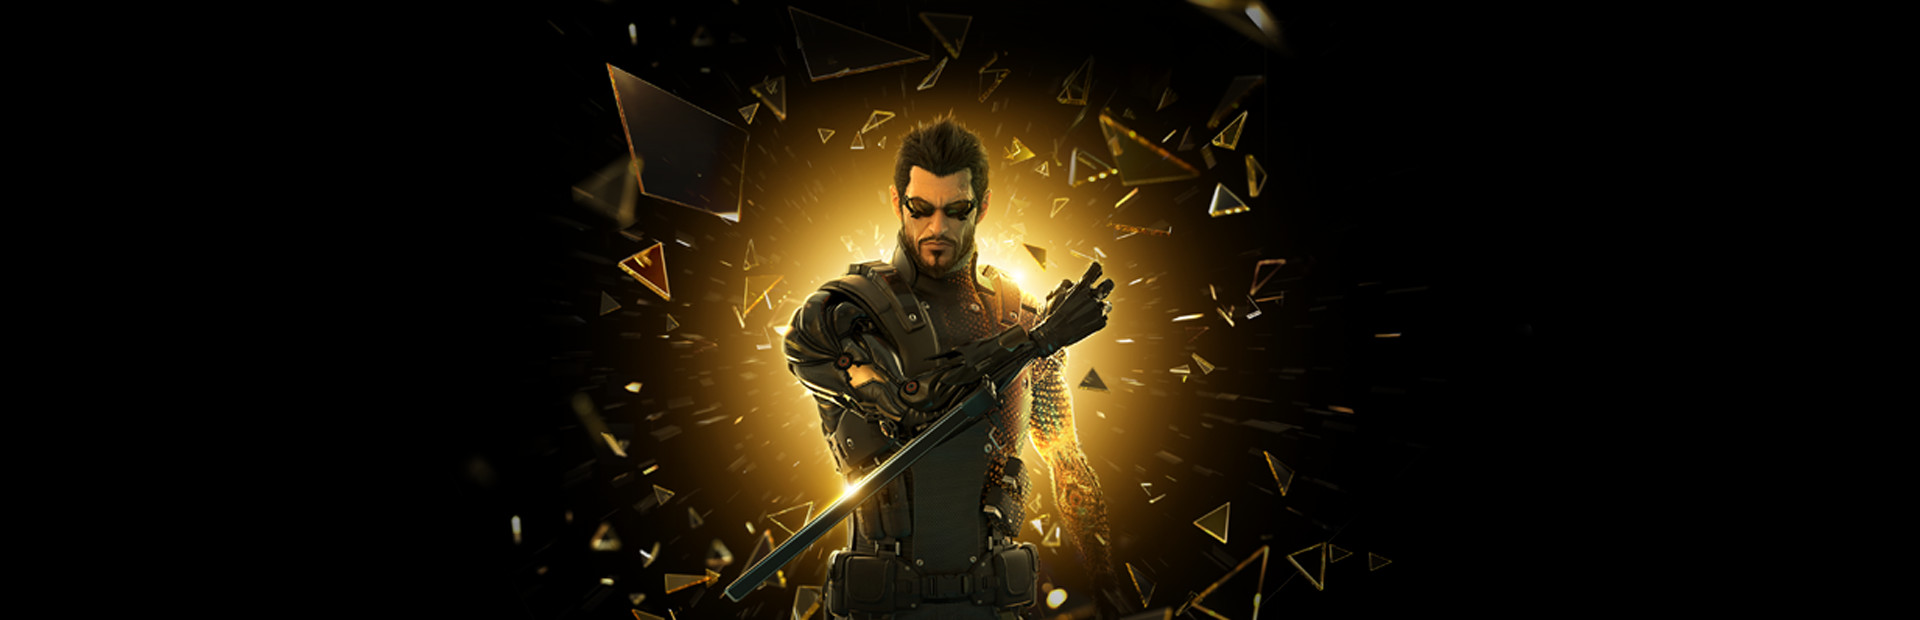 Deus Ex: Human Revolution - Director's Cut cover image